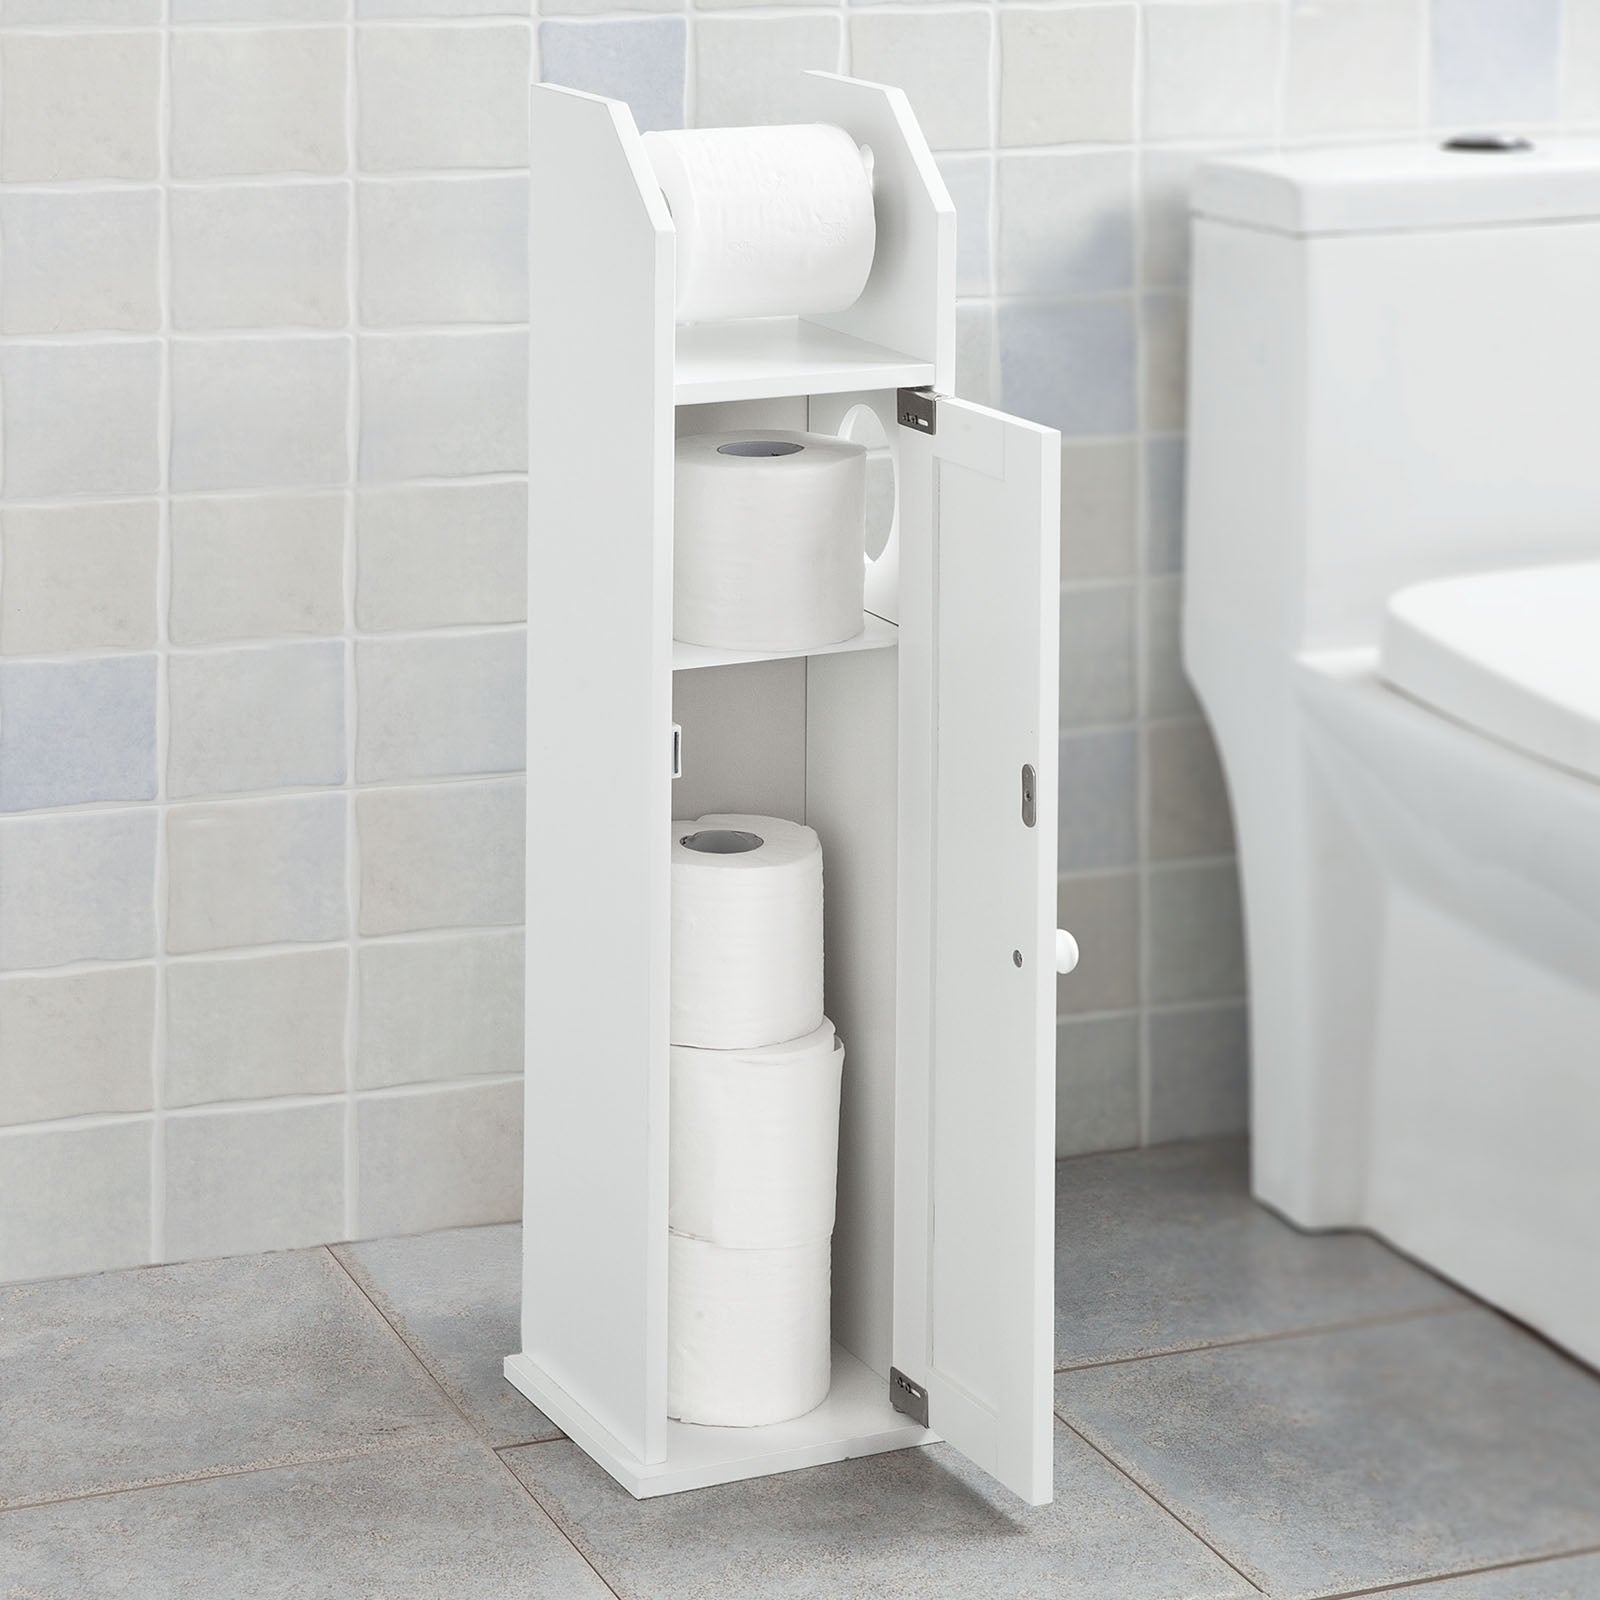 White Wood Free Standing Toilet Paper Roll Holder Bathroom Storage